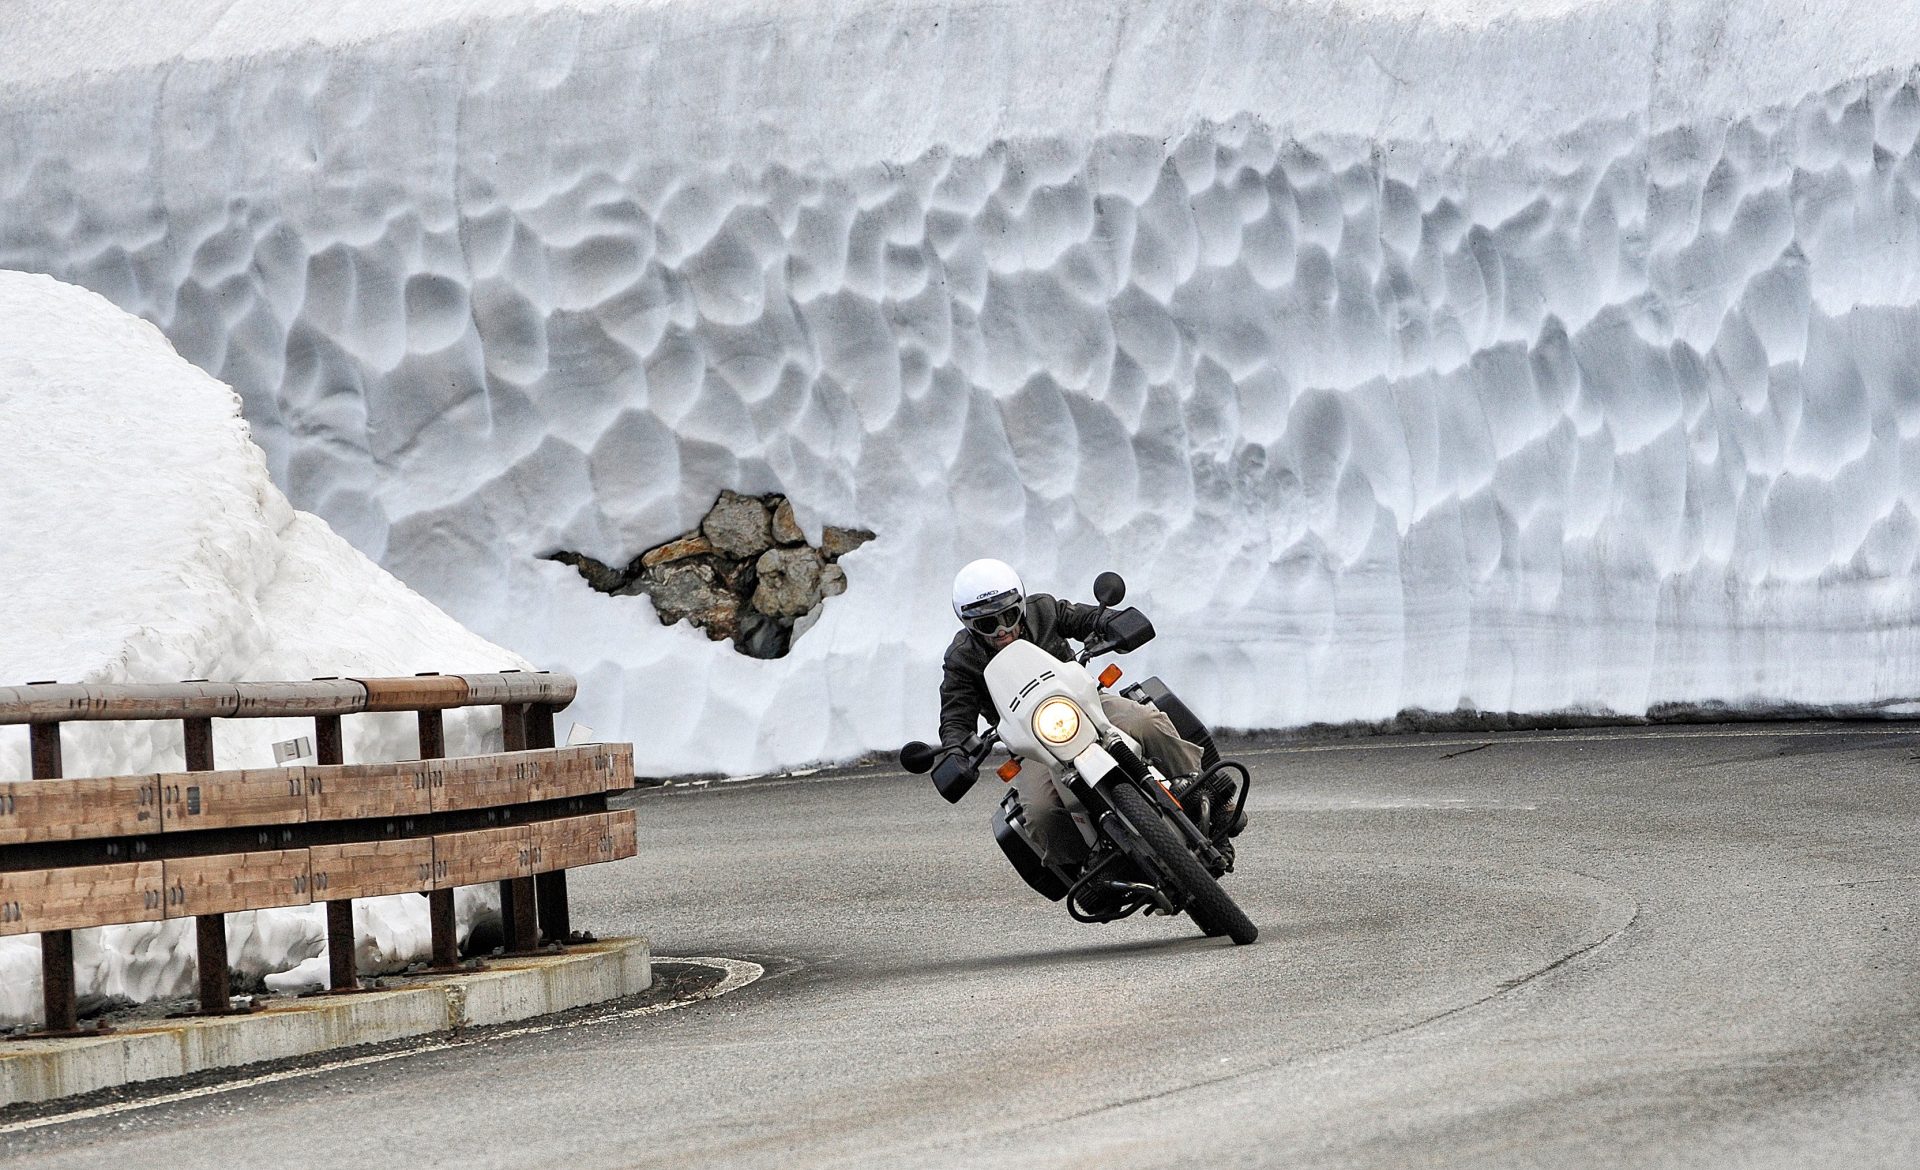 Motorcycle Ride in the Snow - VeteranCarDonations.org